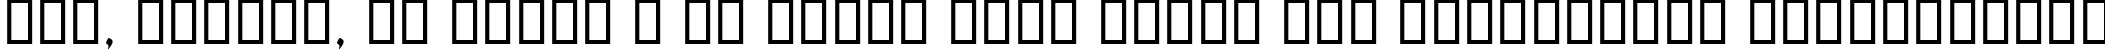 Пример написания шрифтом B Arabic Style текста на украинском